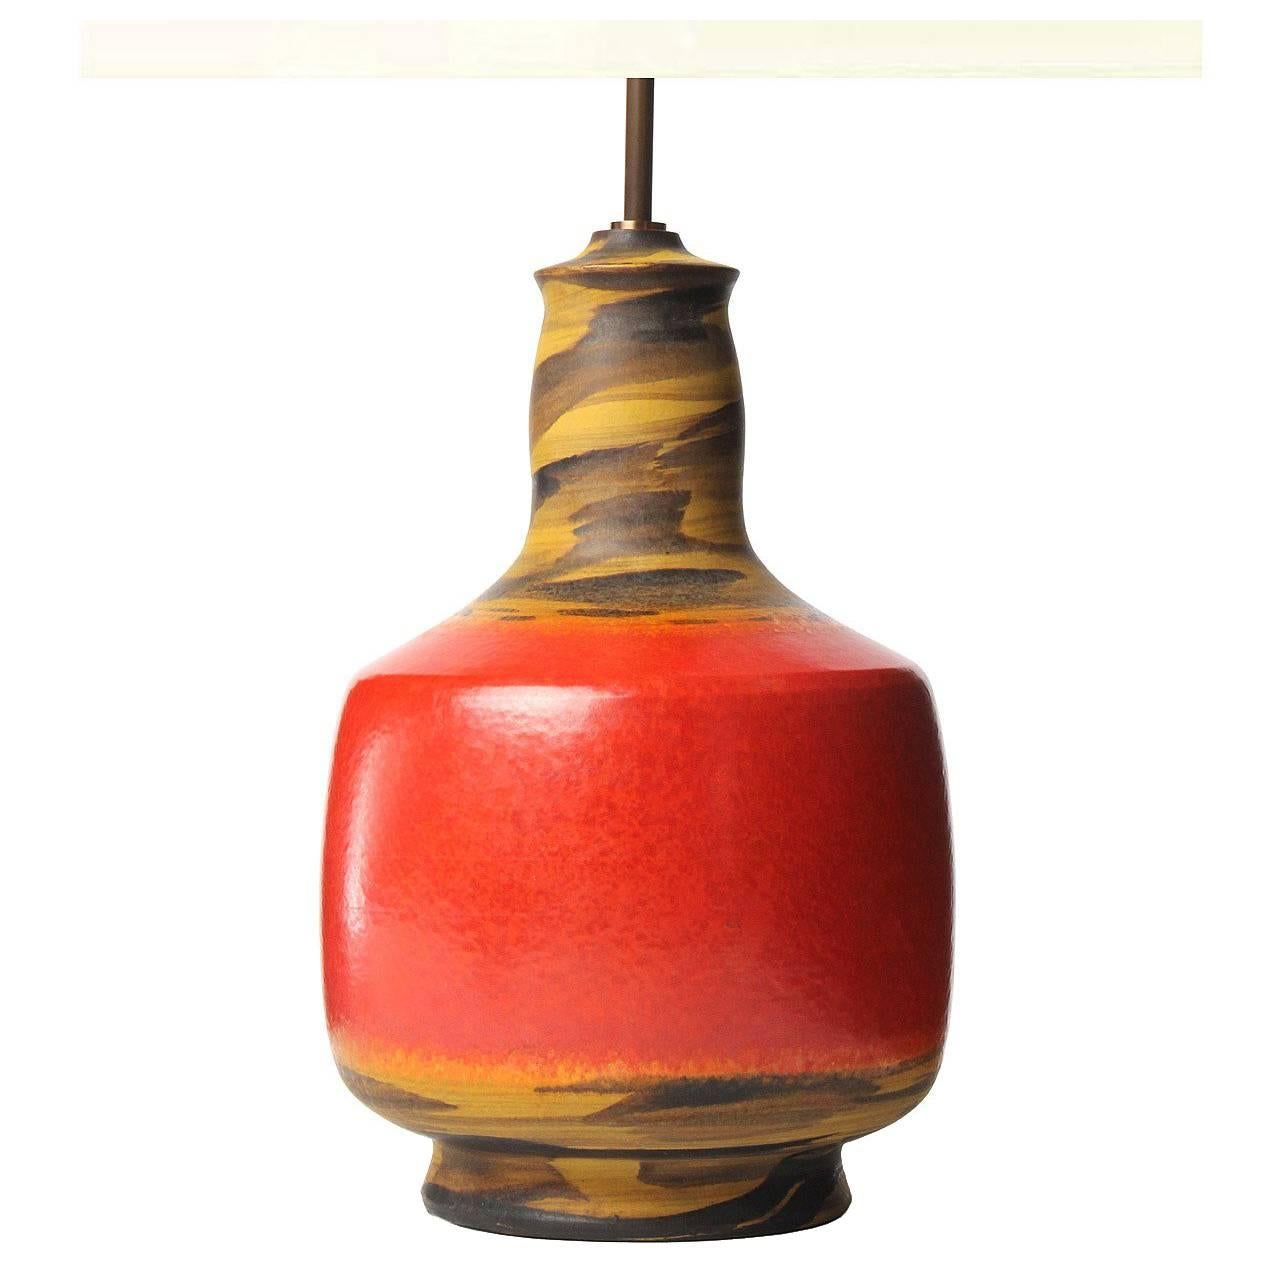 Italian Ceramic Table Lamp